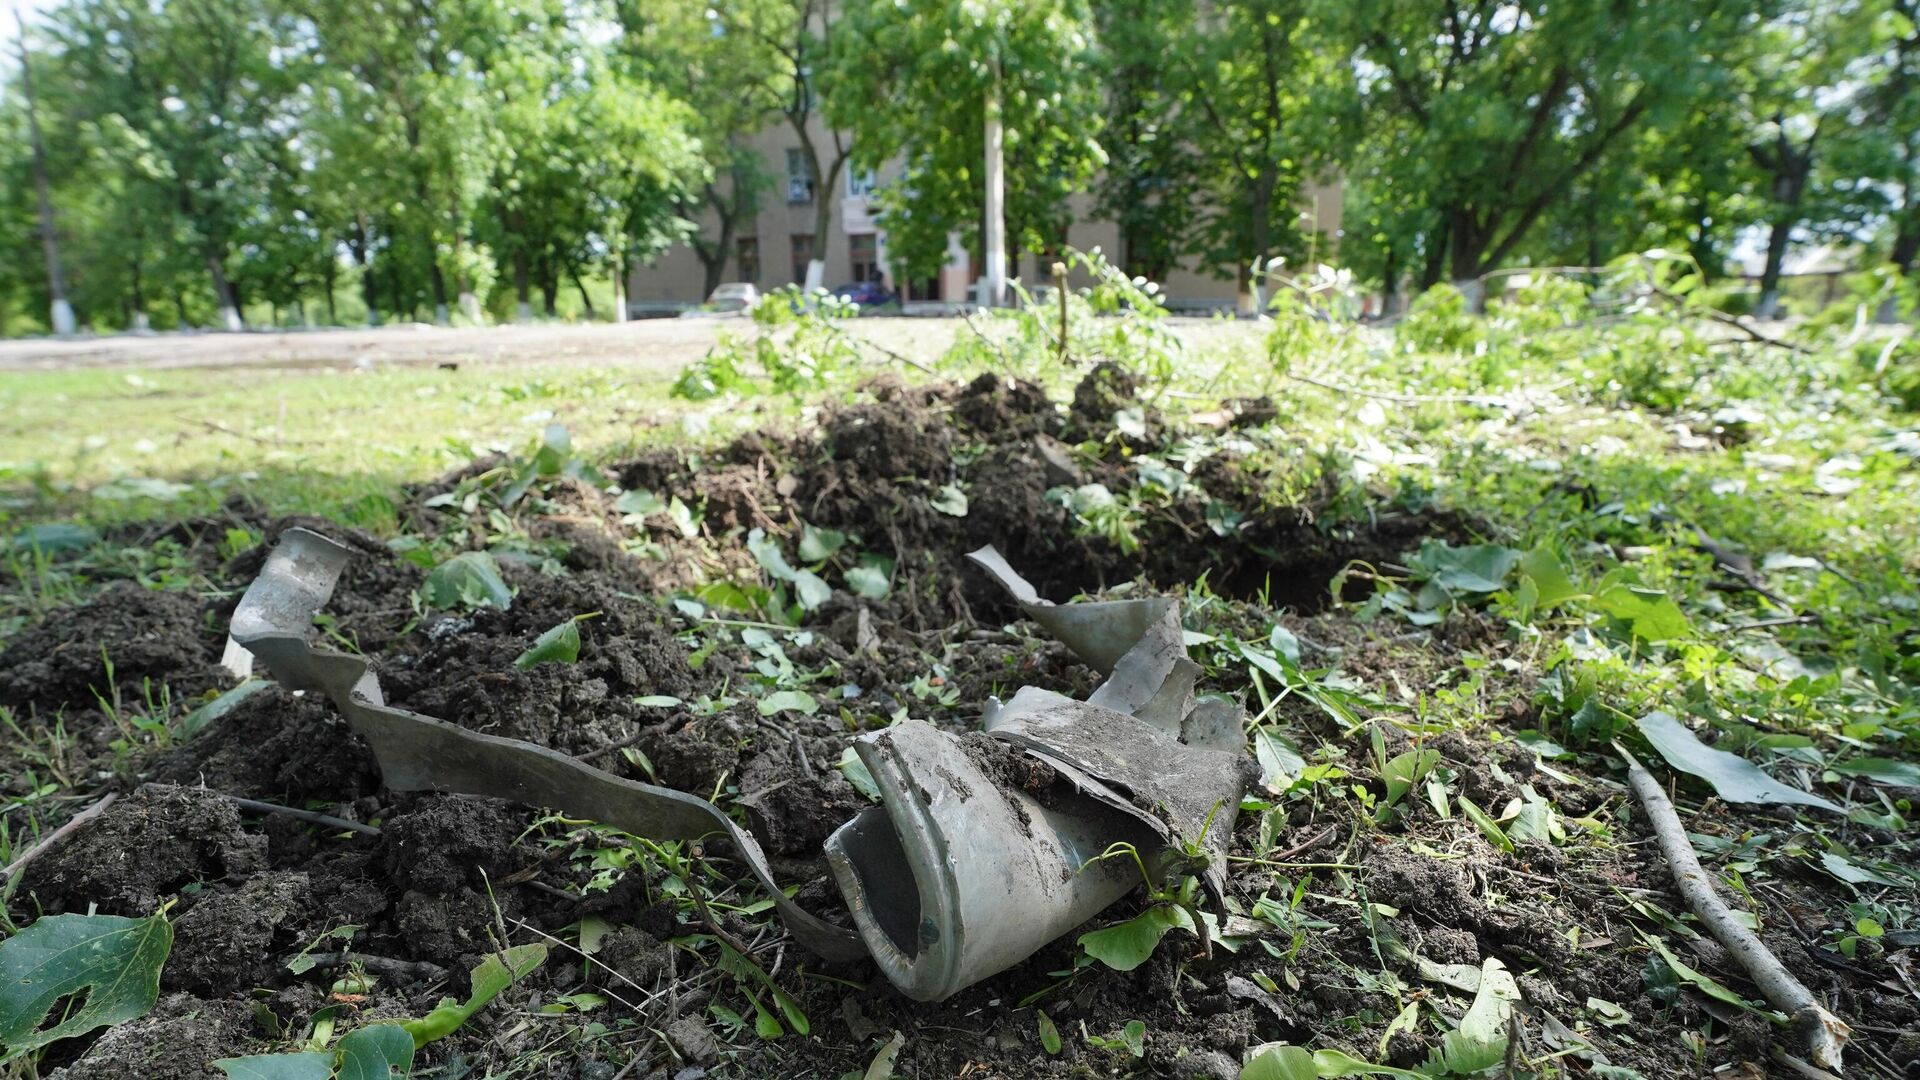 Ukrainian troops bombarded the center of Gorlovka from the MLRS